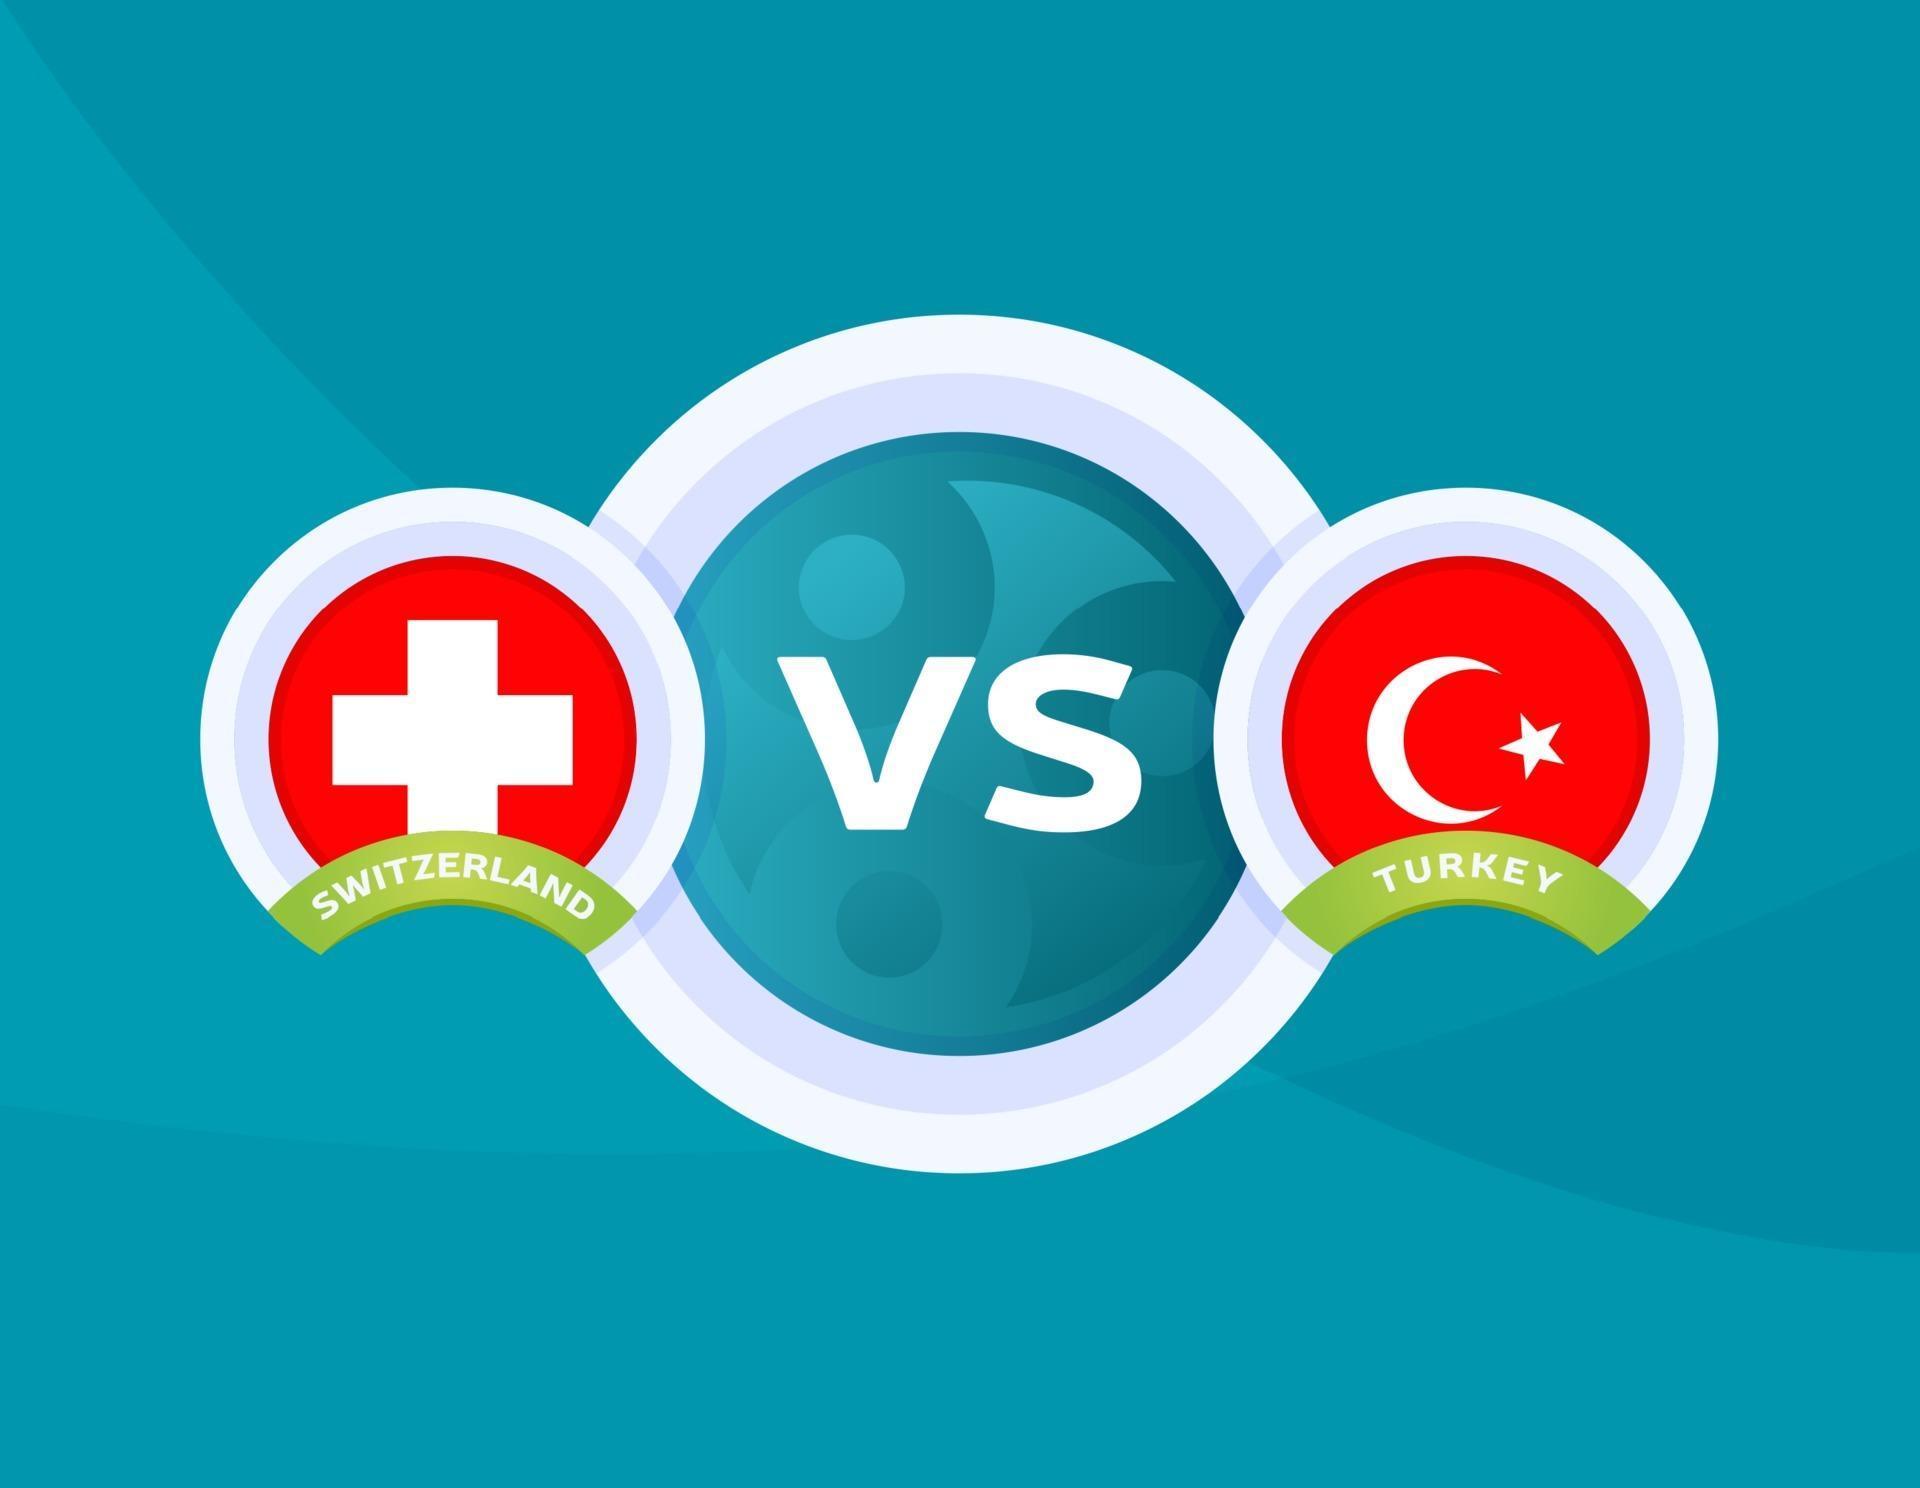 Switzerland vs turkey